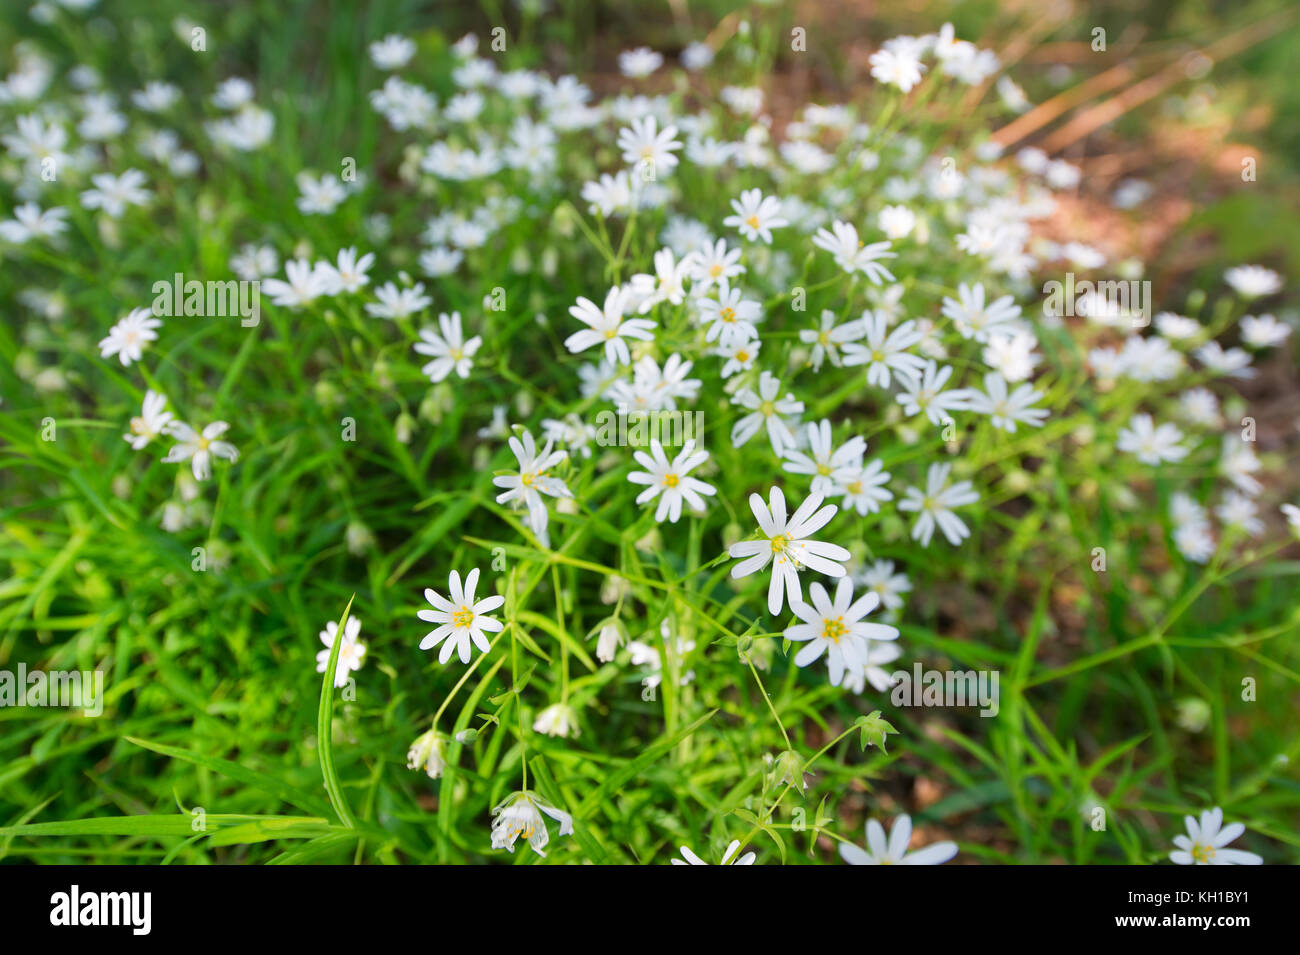 Gypsophila flowers in nature Stock Photo